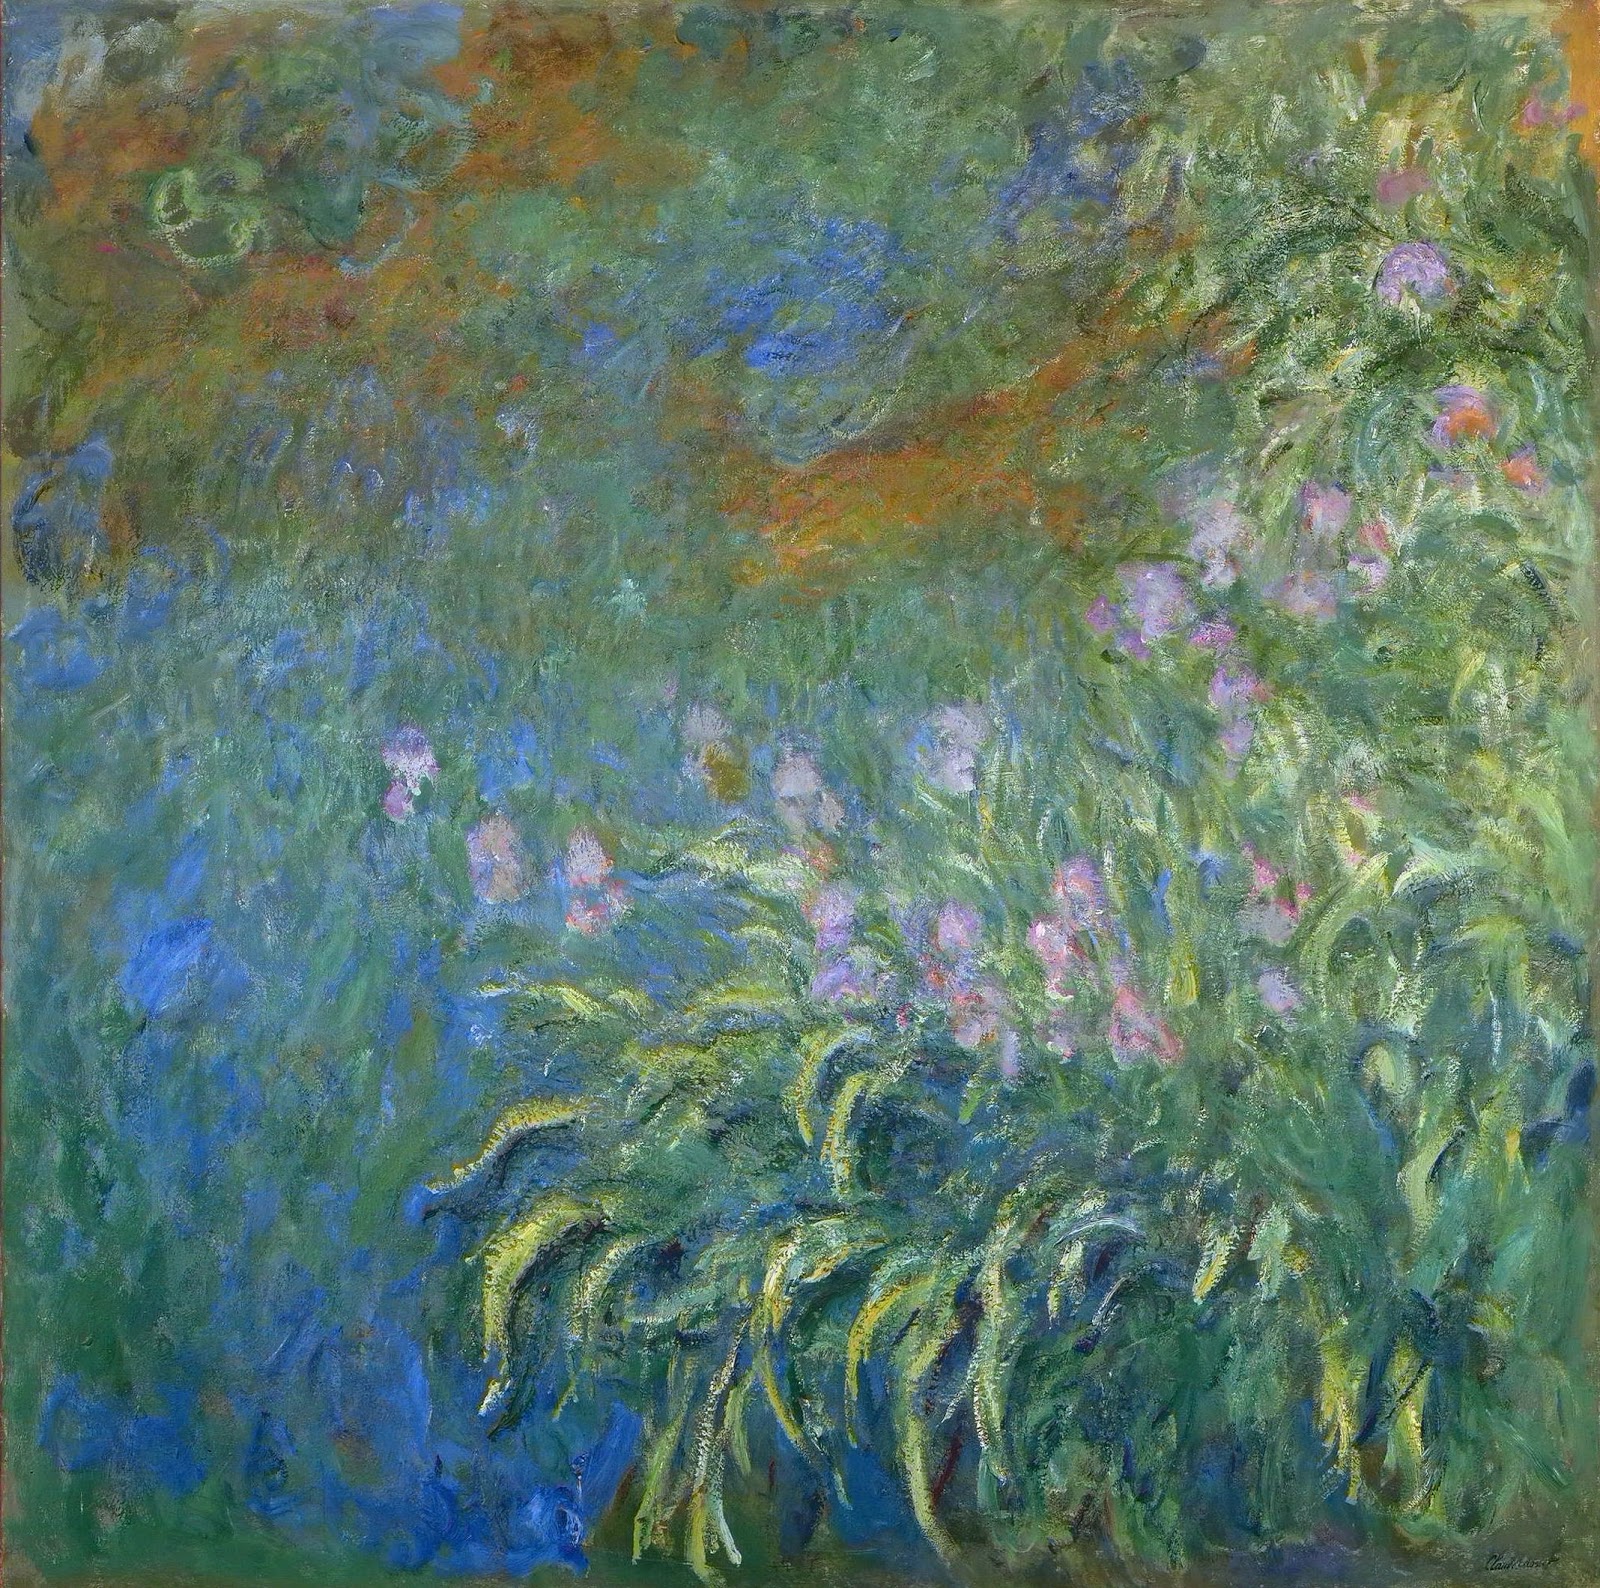 Claude+Monet-1840-1926 (321).jpg